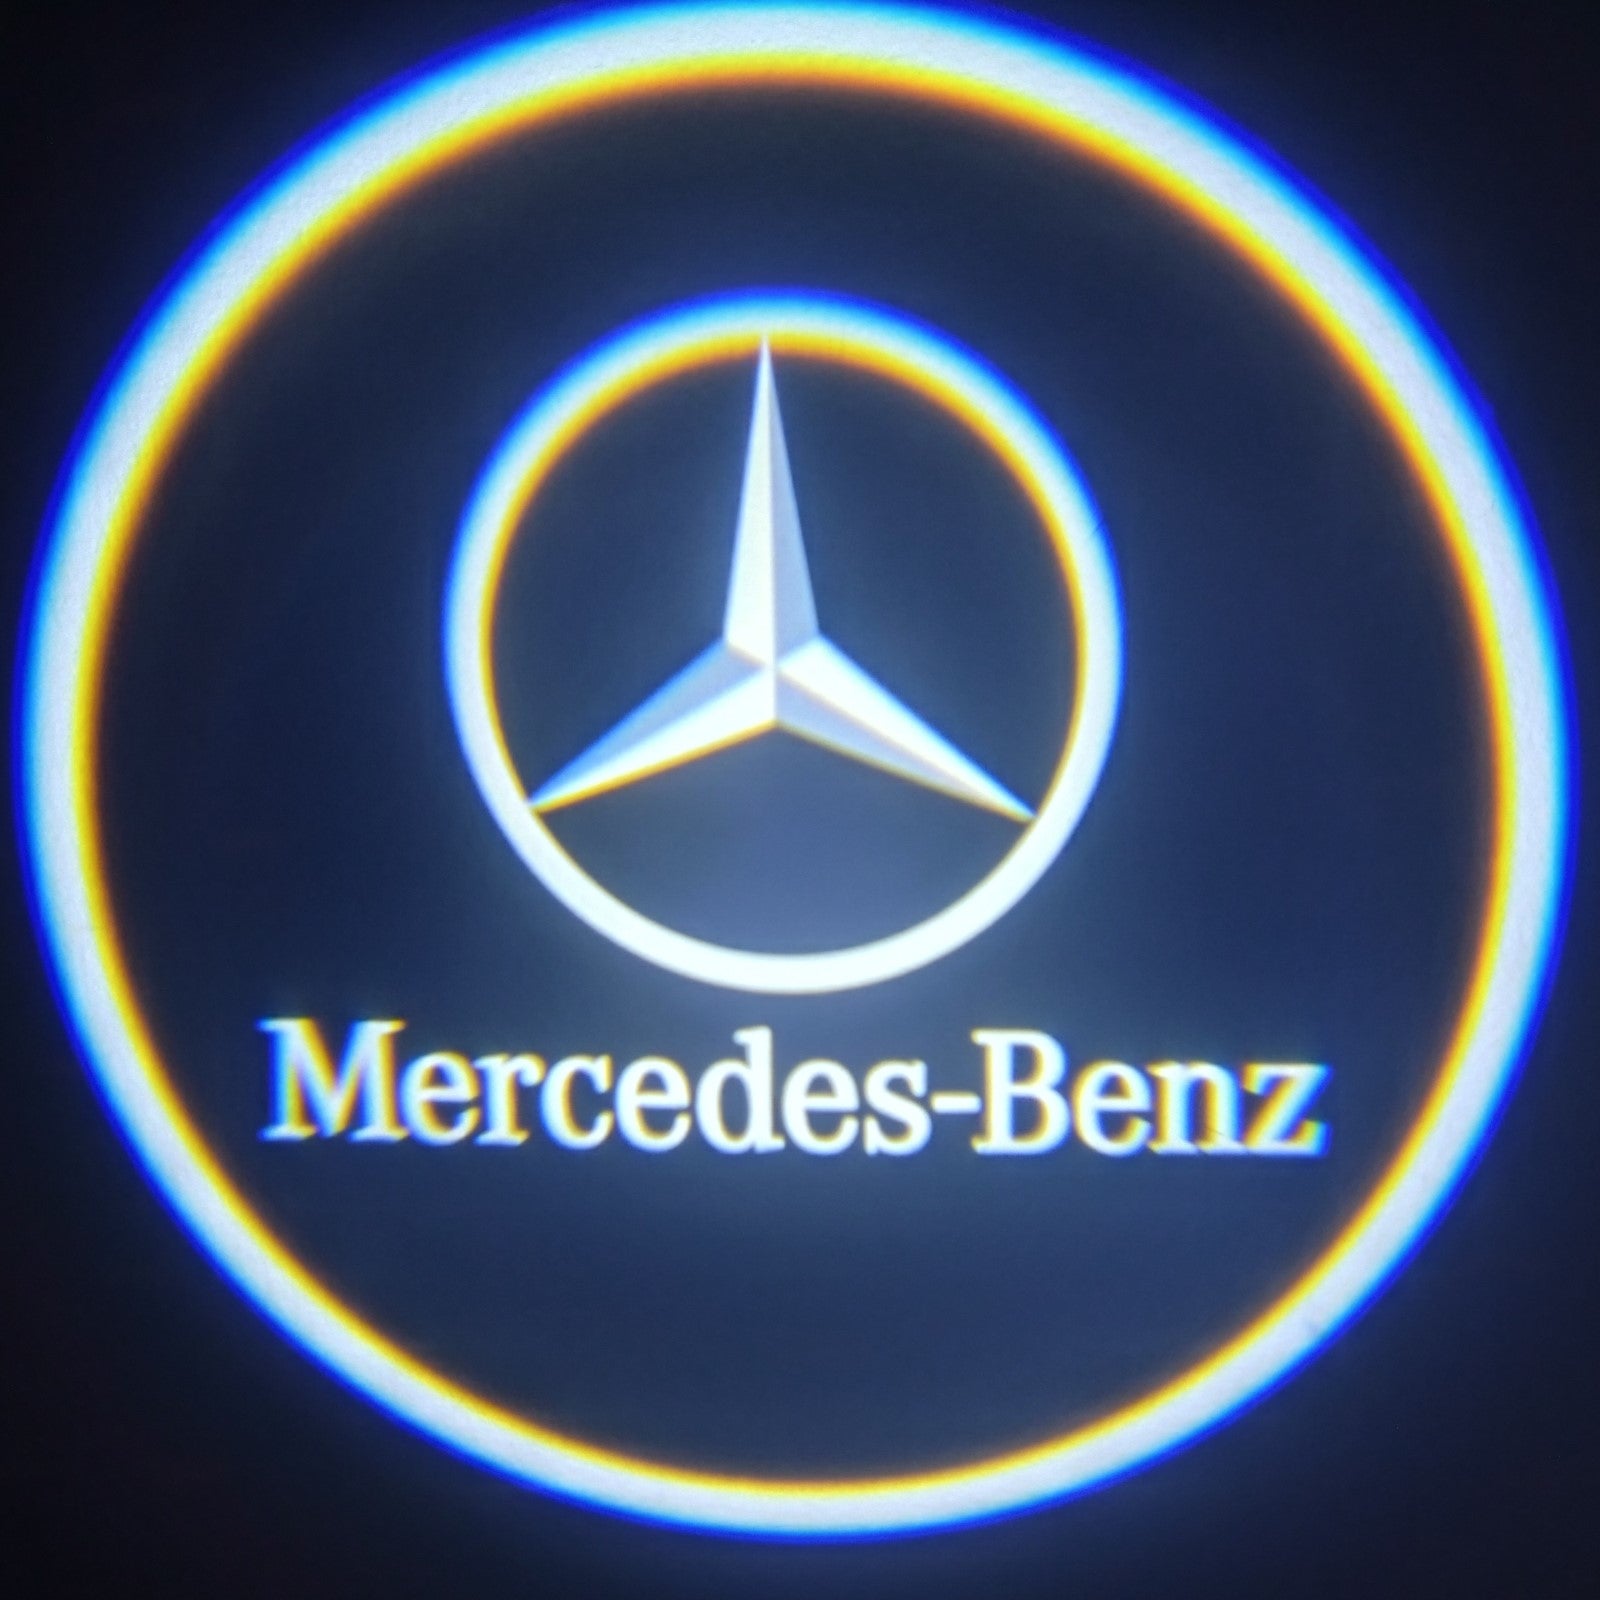 Luzes Cortesia com Logotipo marca Mercedes-Benz